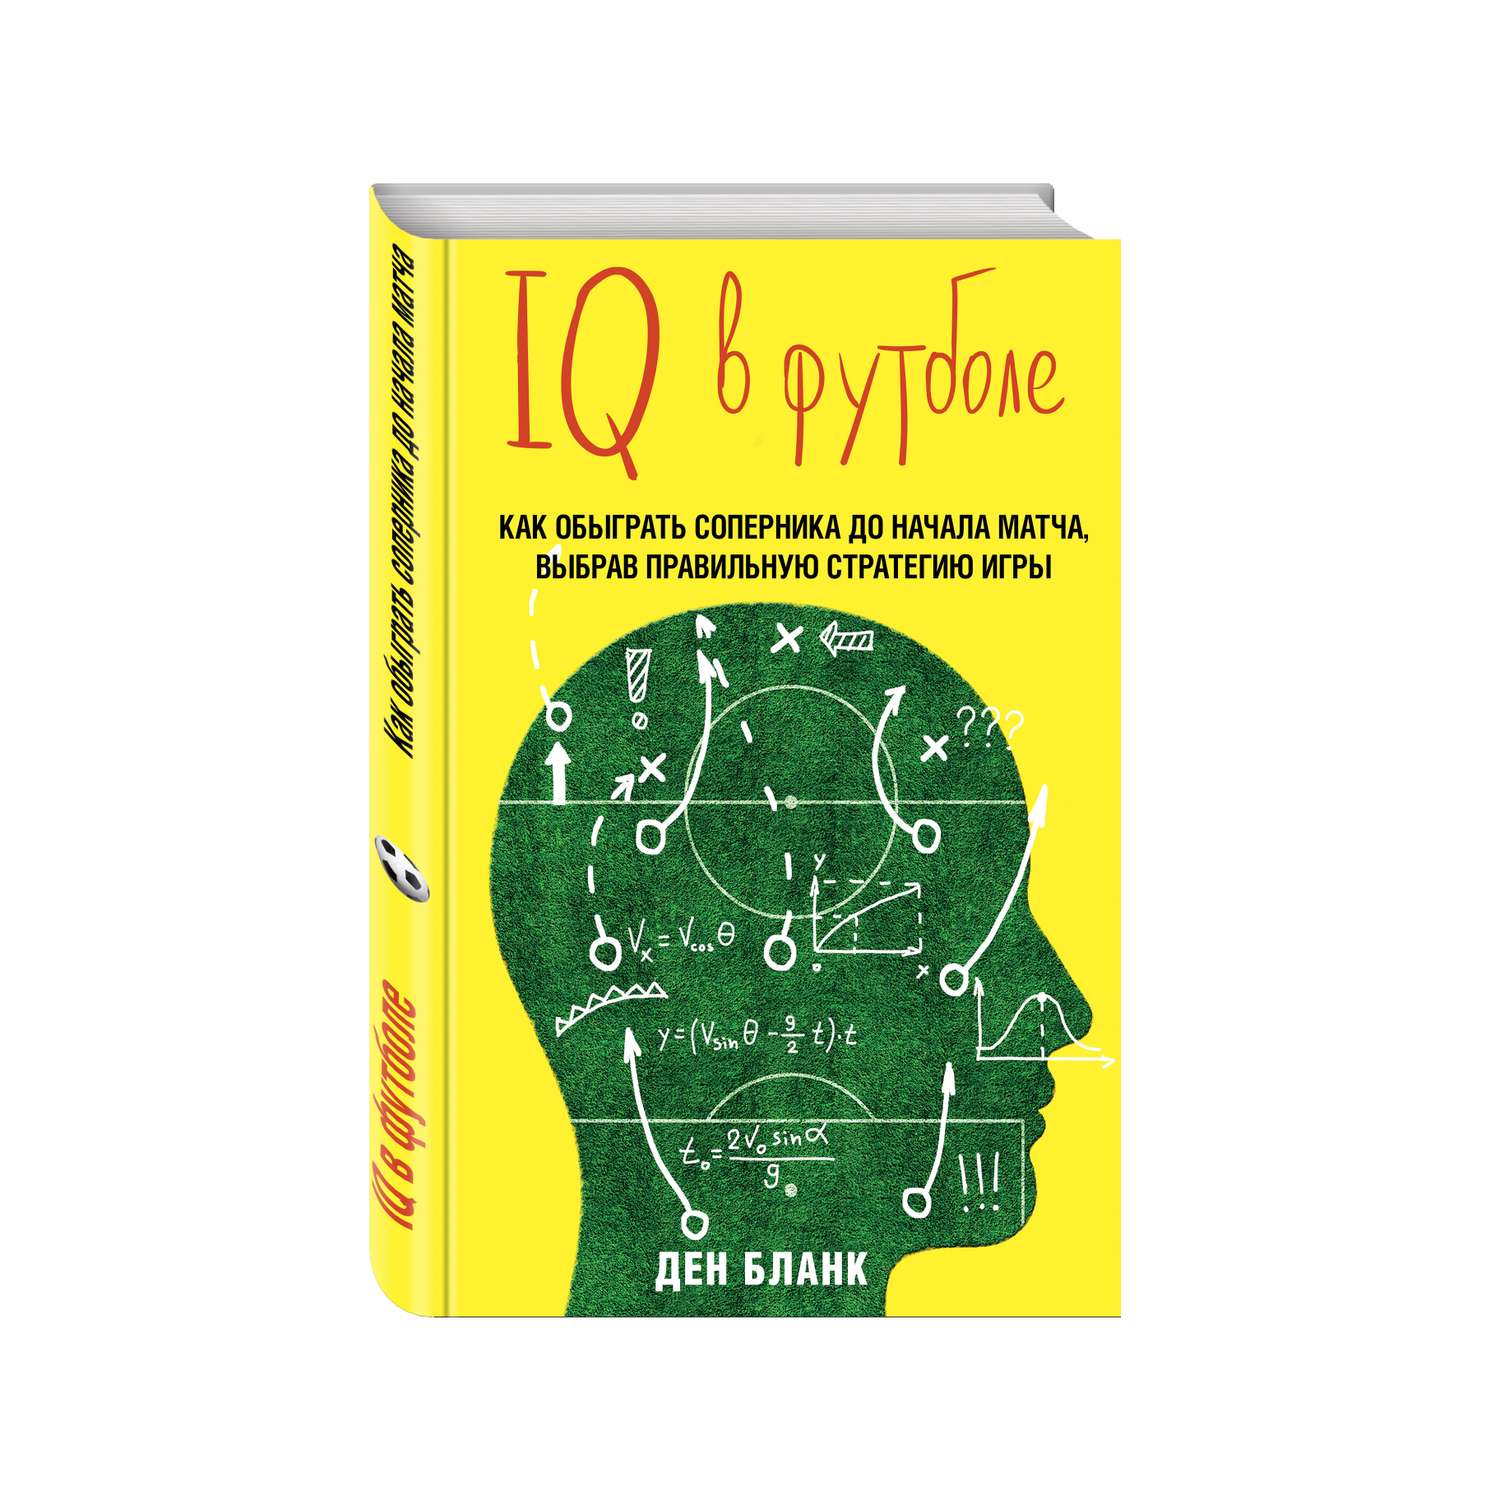 Книга Эксмо IQ в футболе Как играют умные футболисты - фото 1